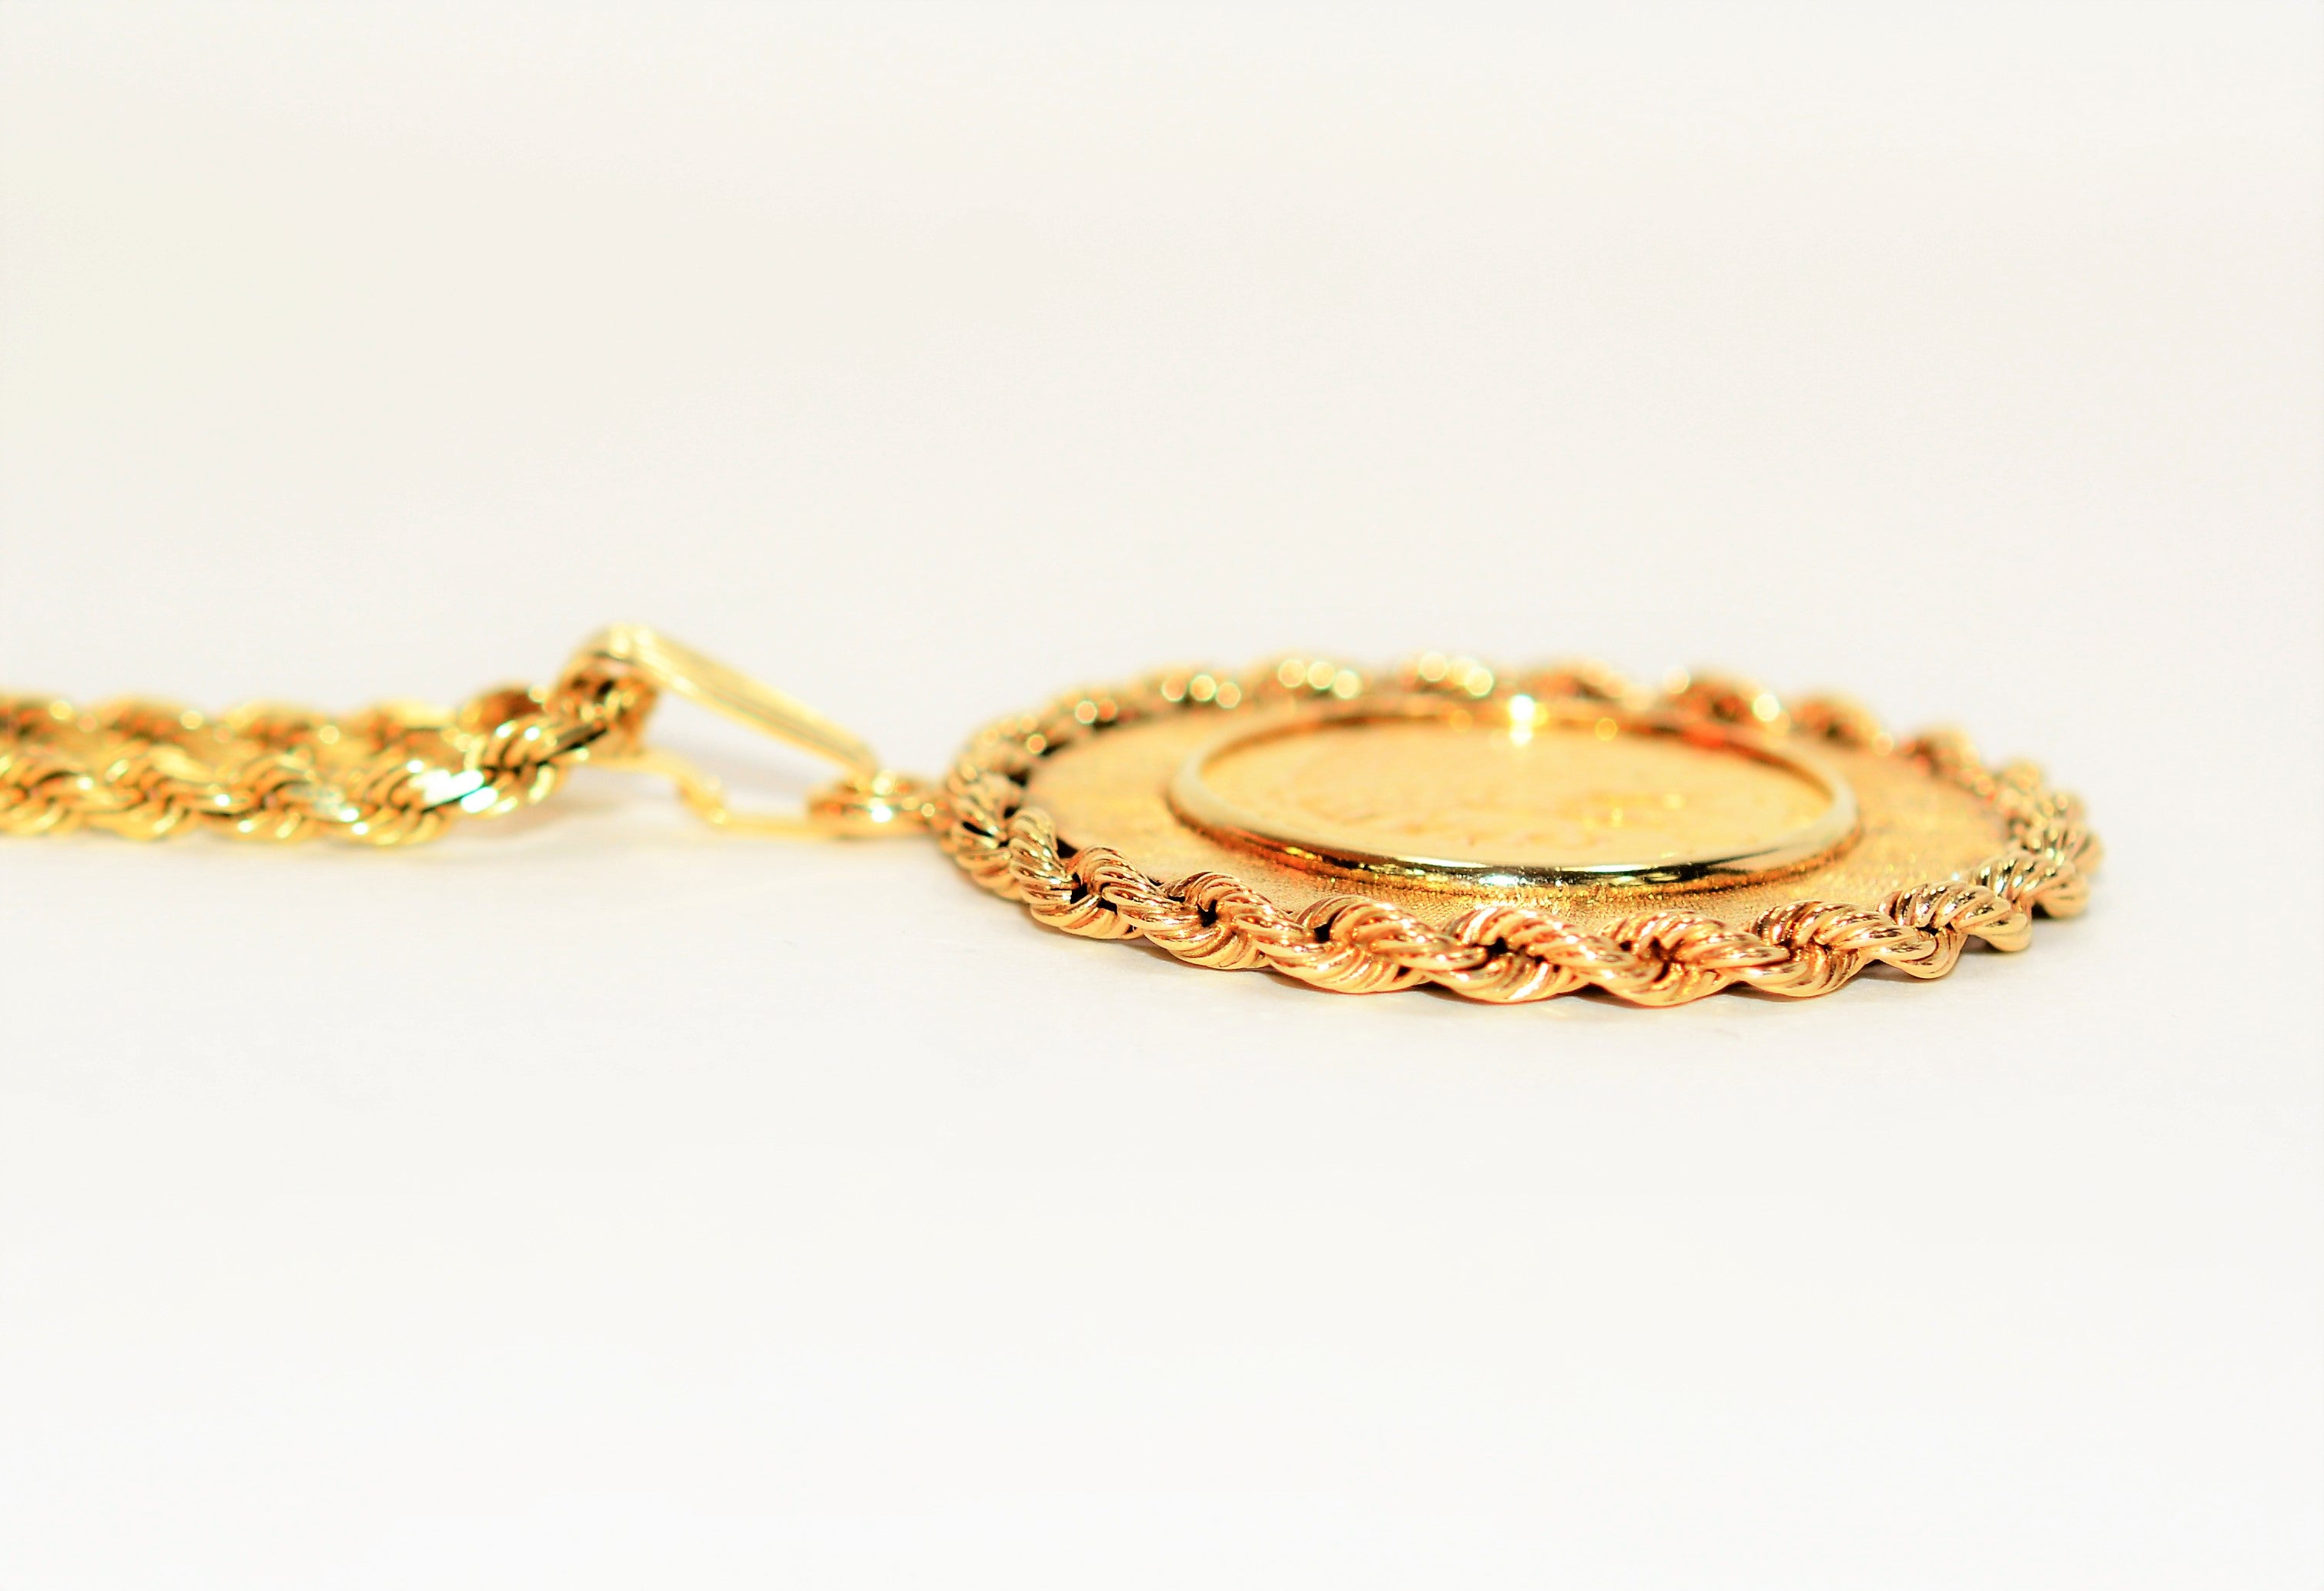 5 Dollar Indian Head Gold Half Eagle Coin Necklace 14K Solid Gold Necklace Coin Pendant Ingot Pendant Bullion Pendant Vintage Estate Jewelry